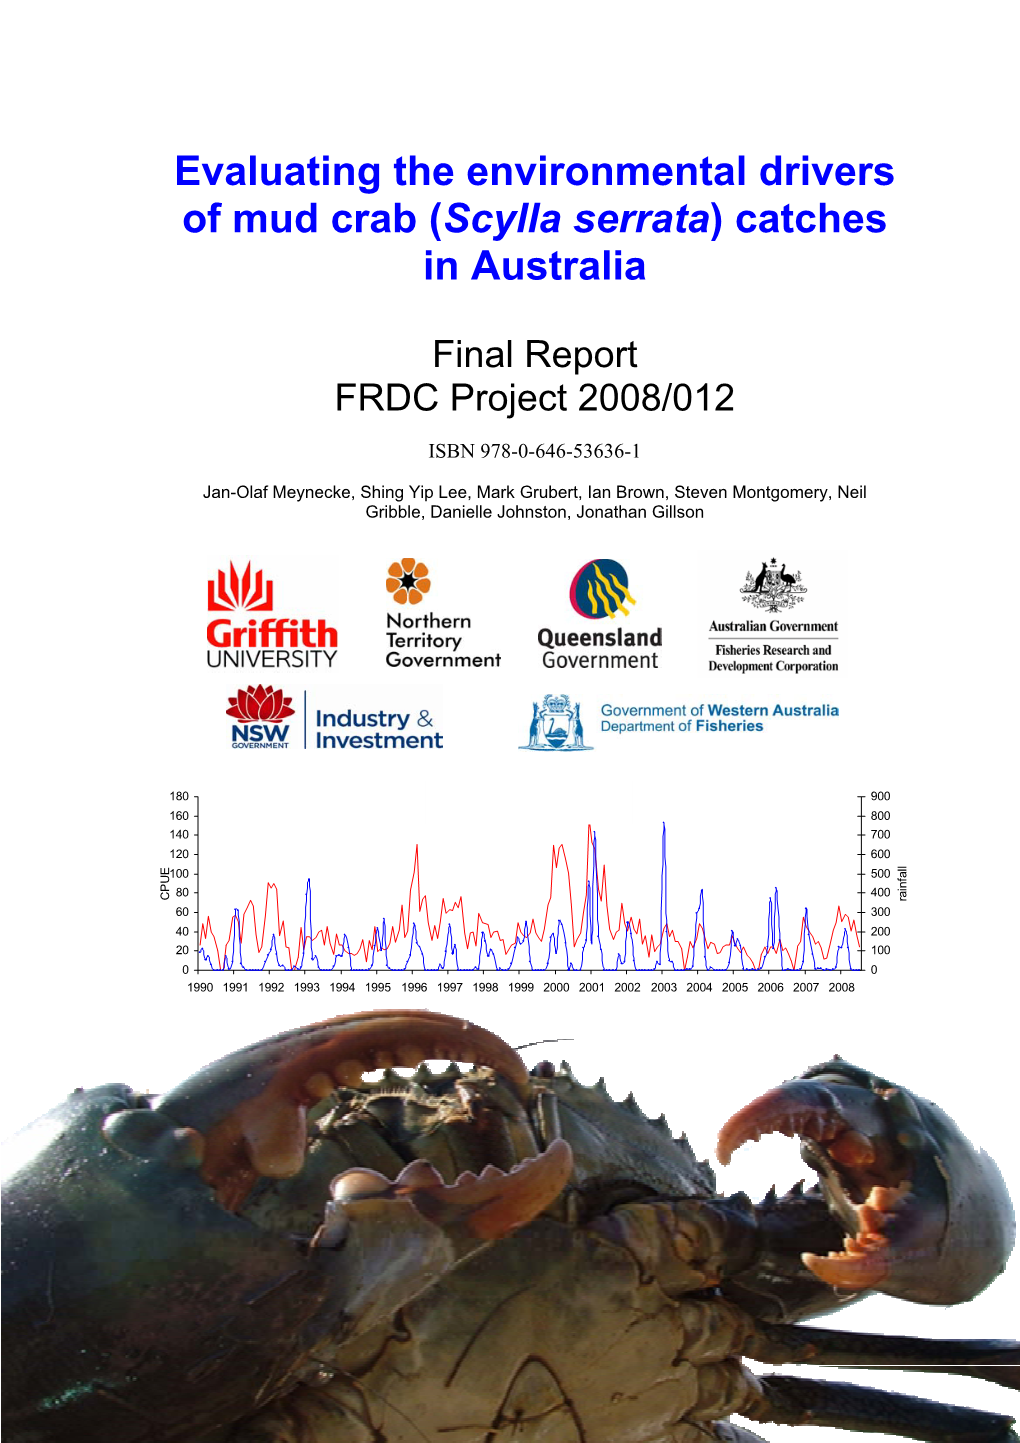 Evaluating the Environmental Drivers of Mud Crab (Scylla Serrata) Catches in Australia